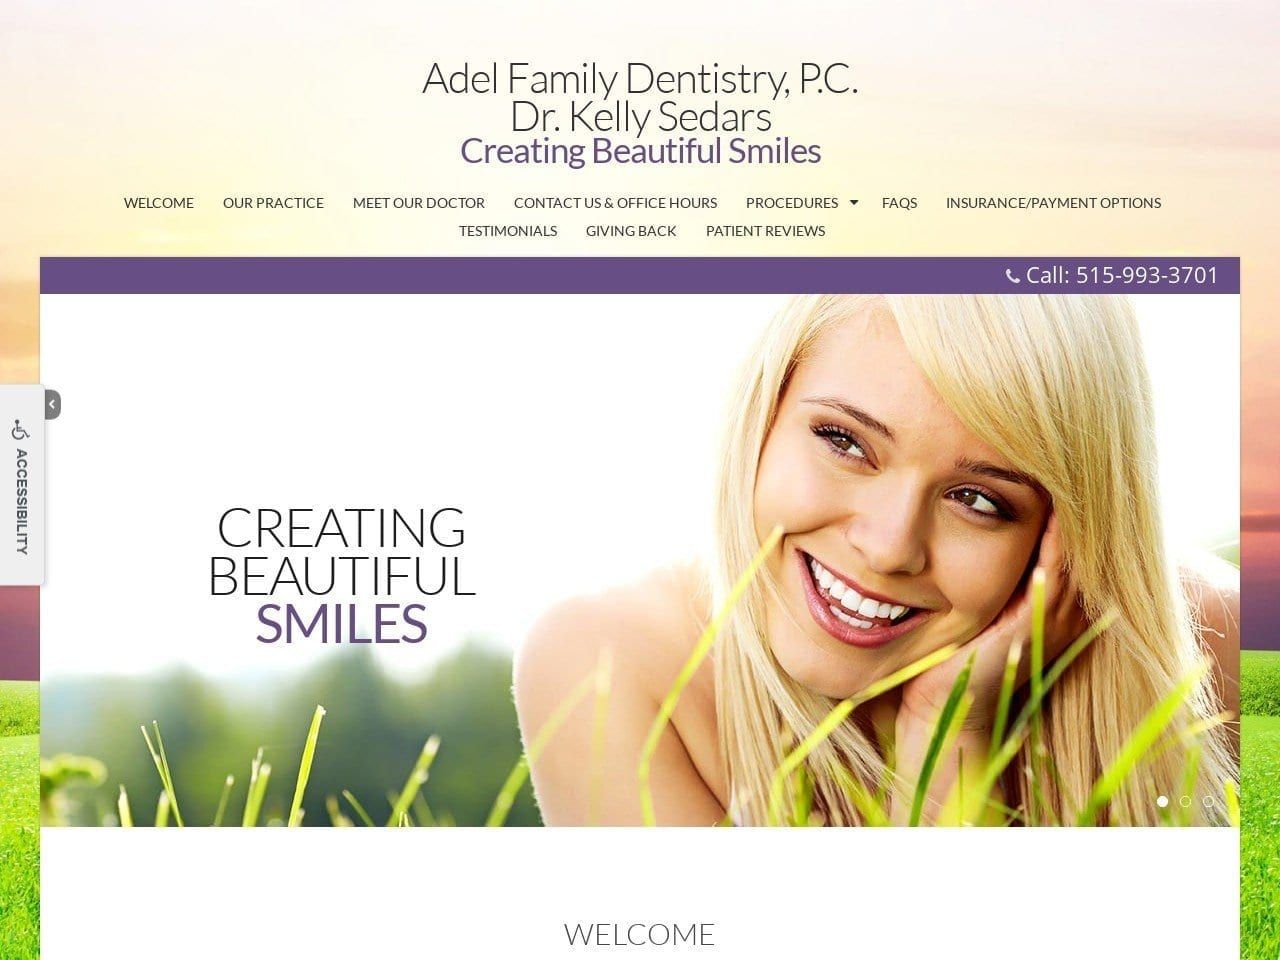 Adel Family Dentist Website Screenshot from adelfamilydentistry.com